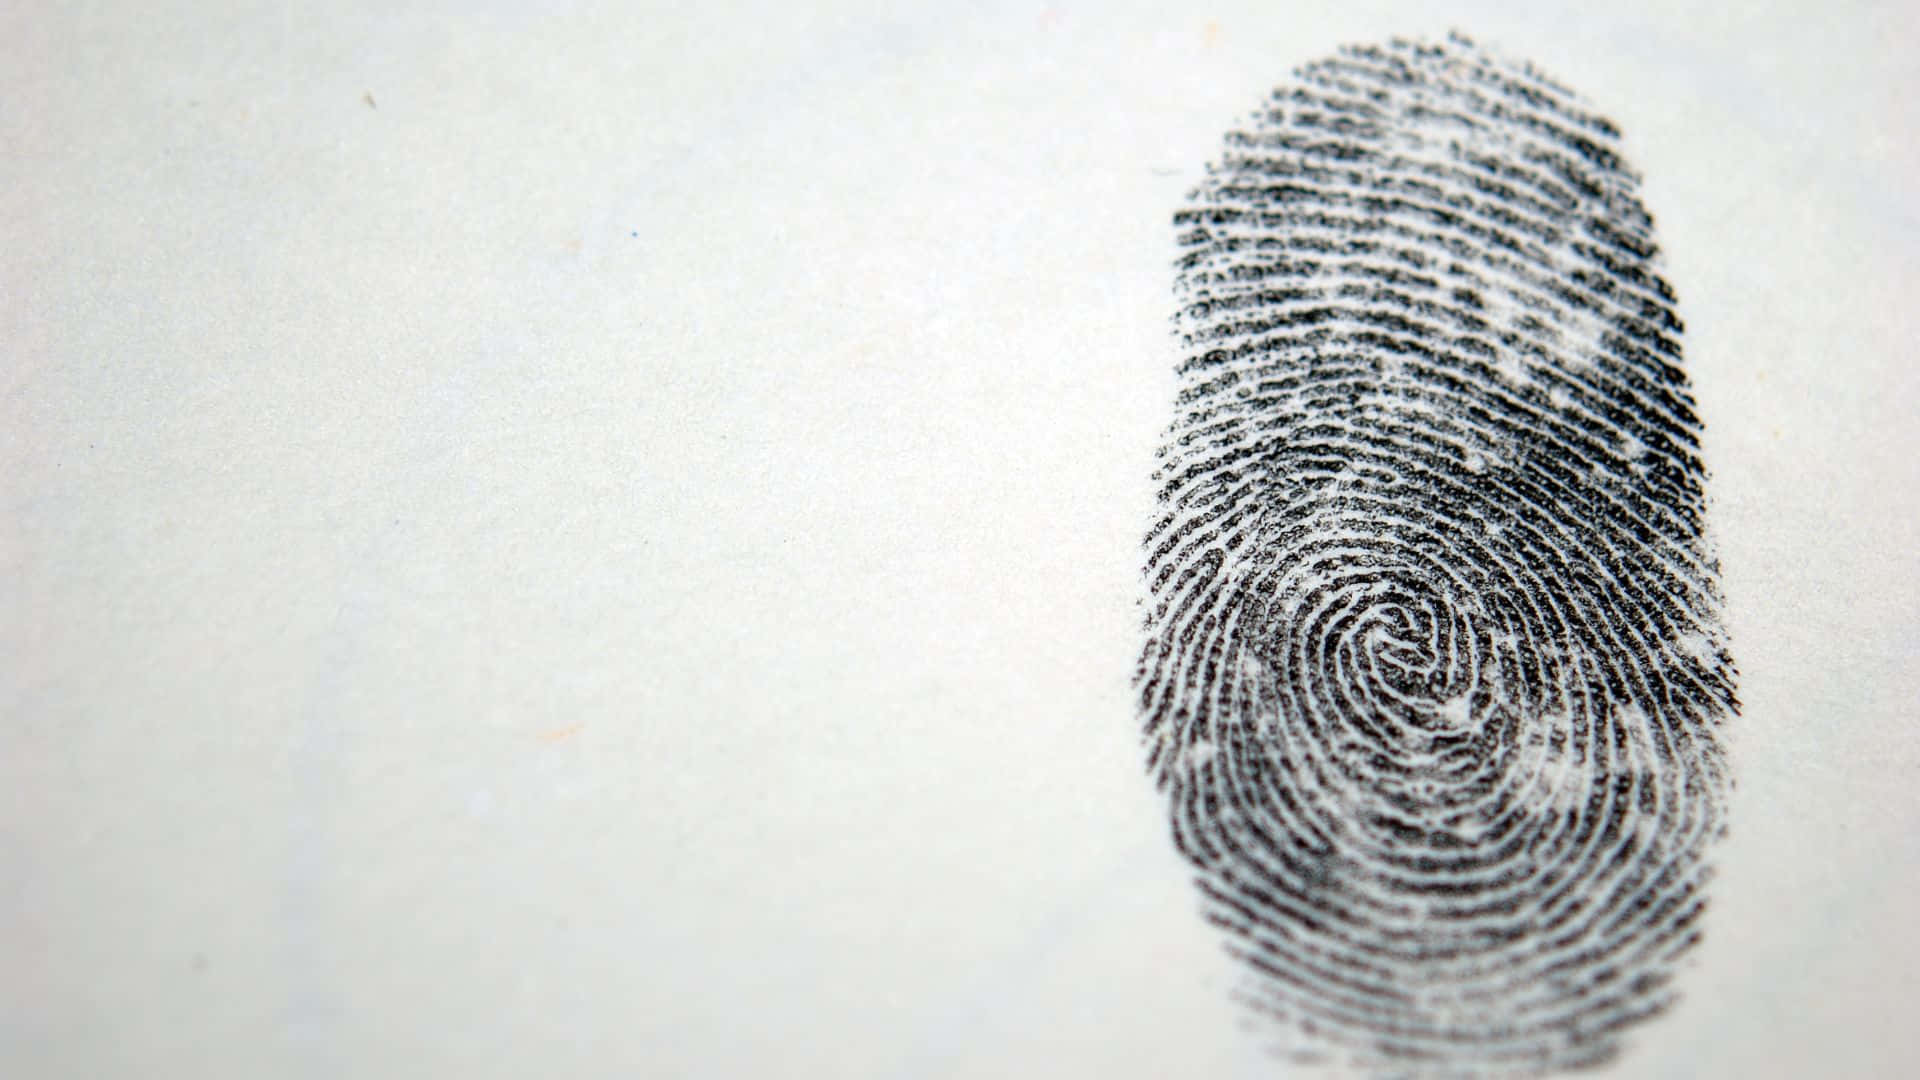 A detailed close-up view of a human fingerprint pattern.